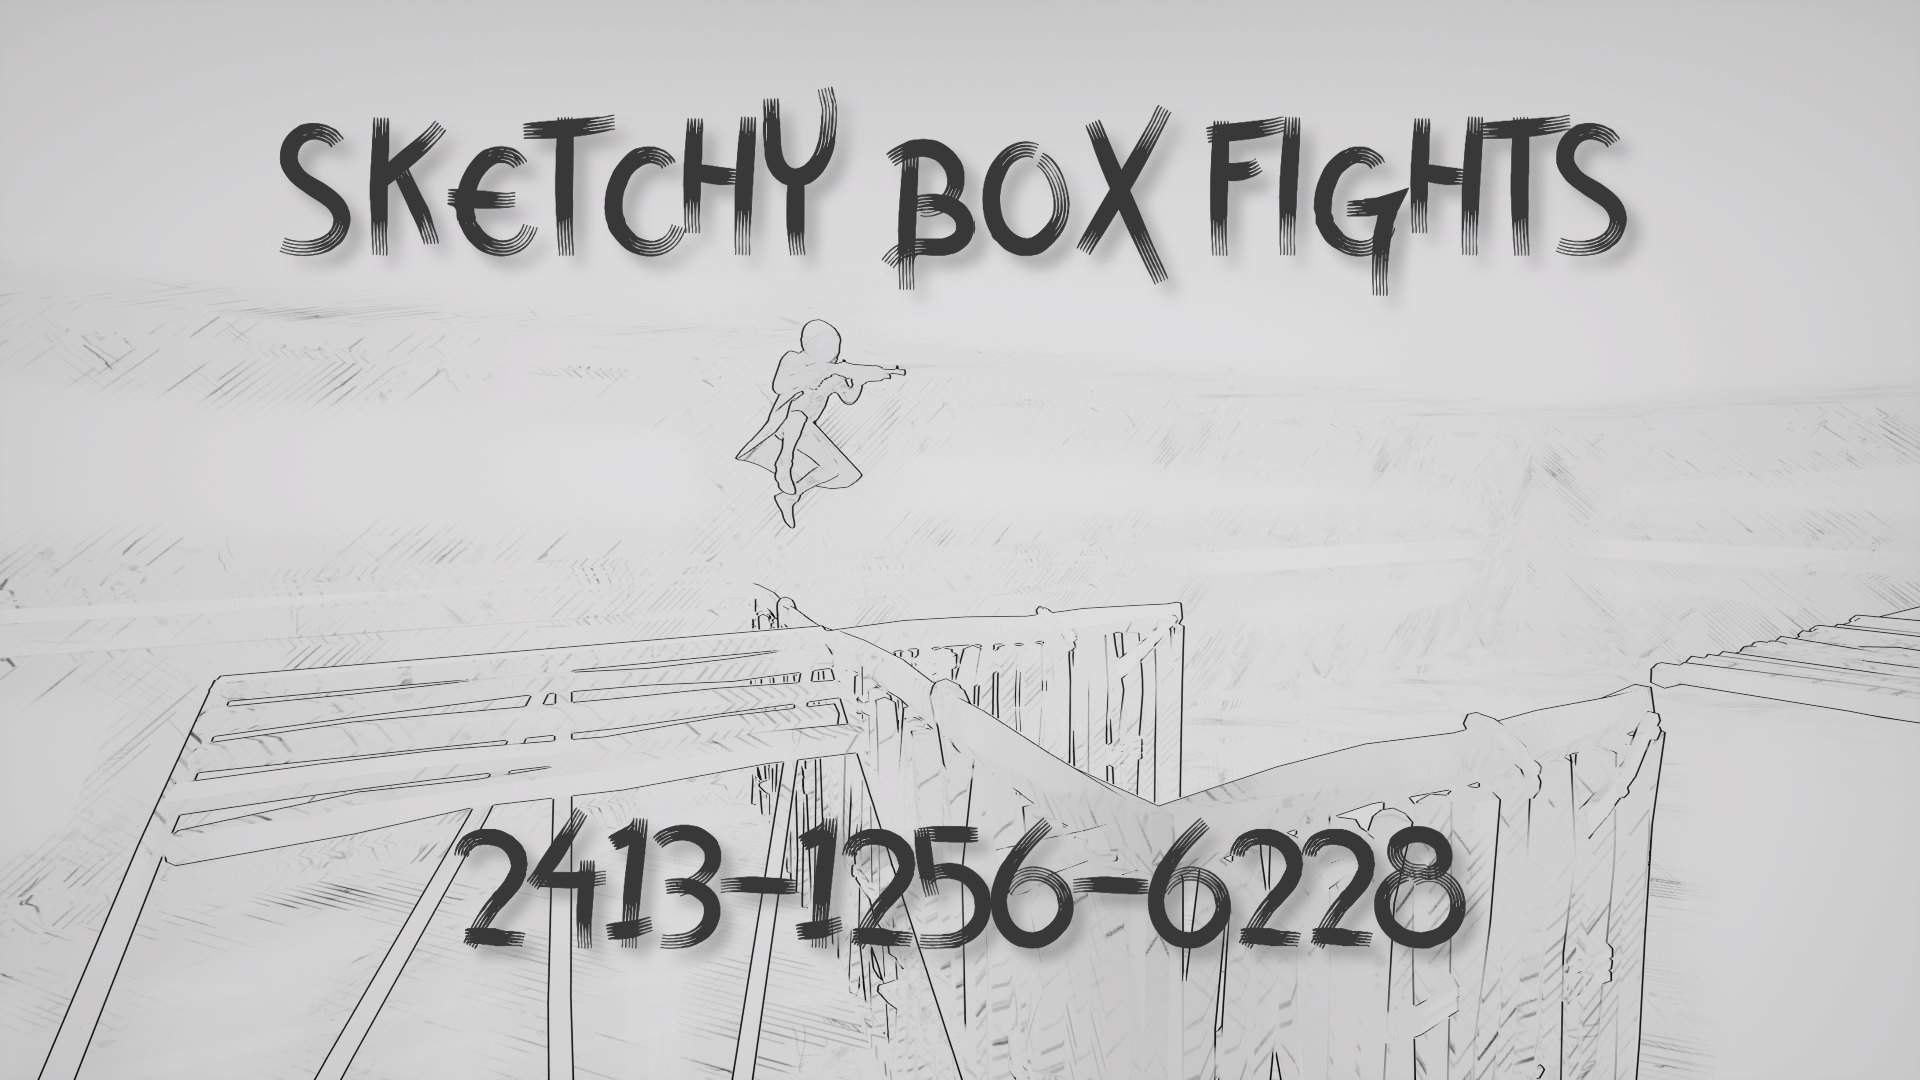 SKETCHY BOX FIGHTS